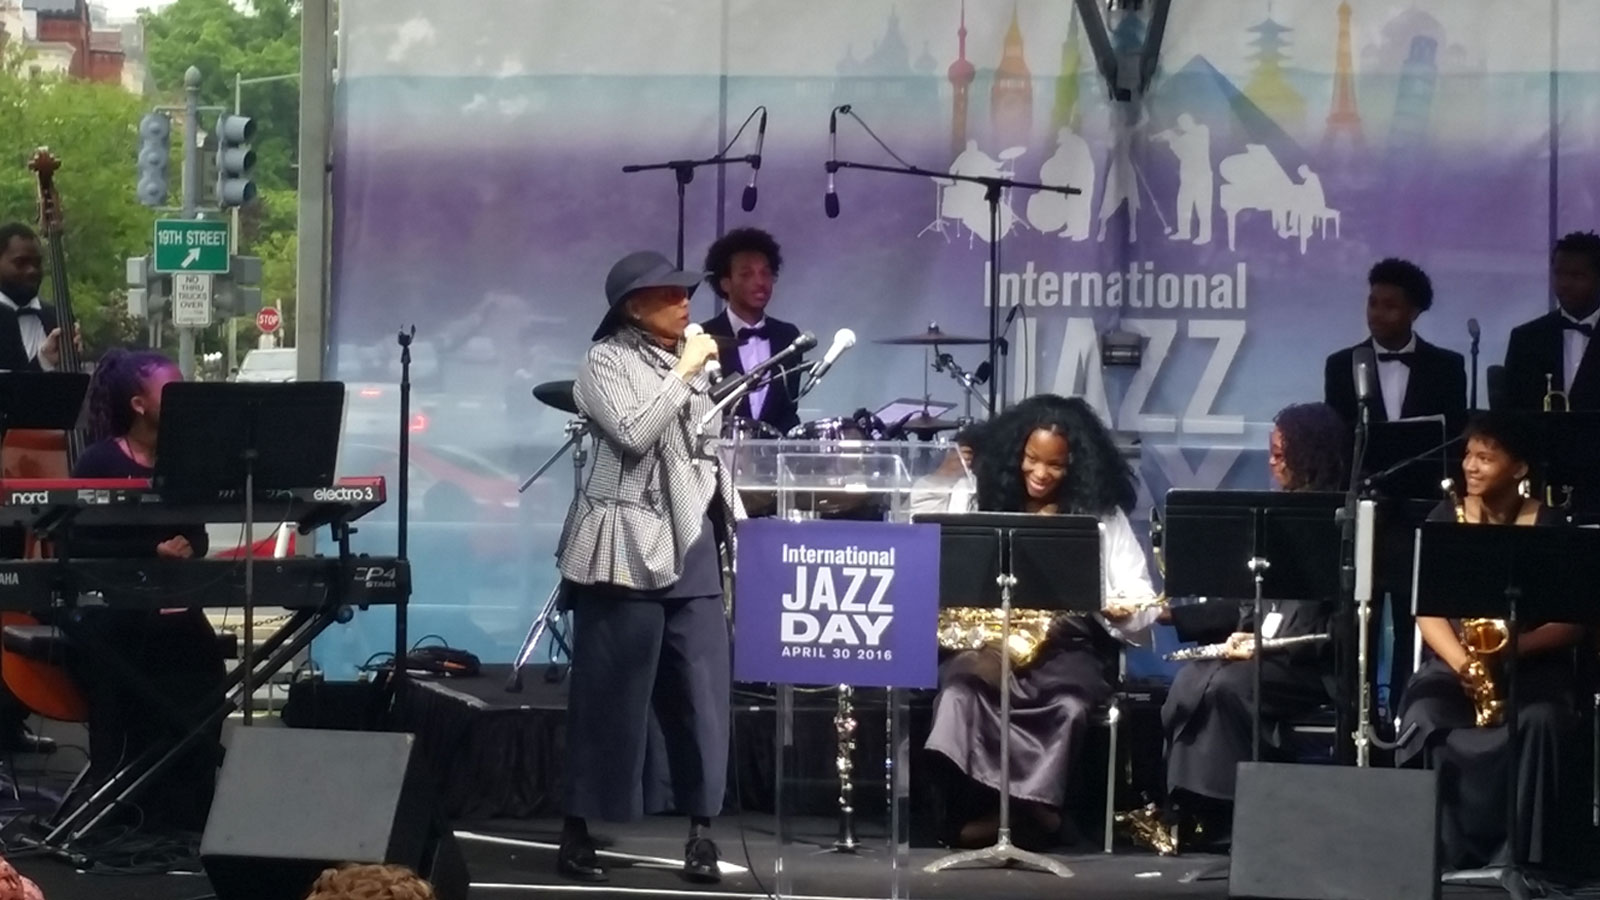 Grammy Award-winning jazz singer Dee Dee Bridgewater took the stage for International Jazz Day. (WTOP/Allison Keyes)